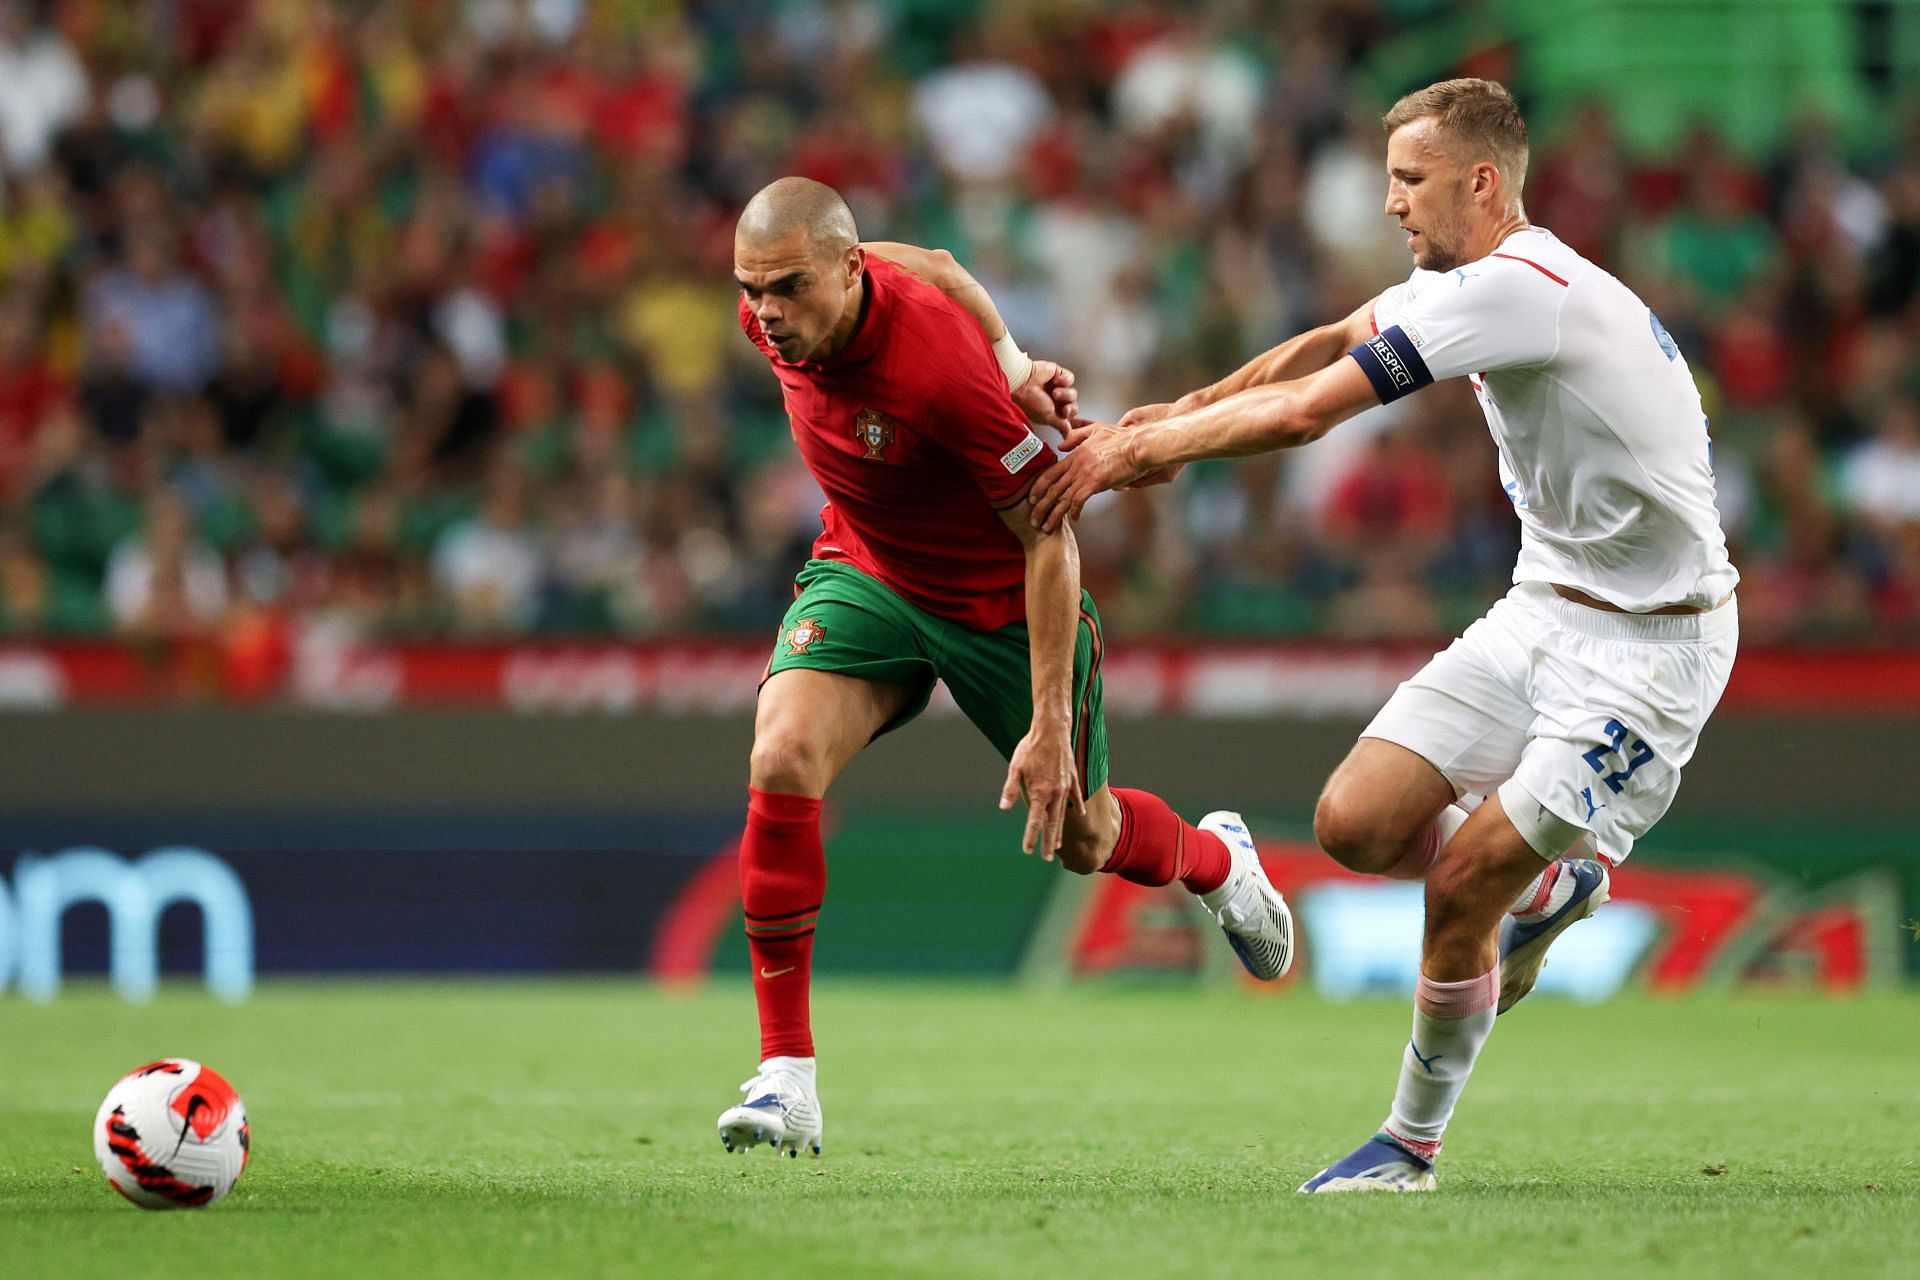  Pepe in action against Czech Republic: UEFA Nations League - League Path Group 2